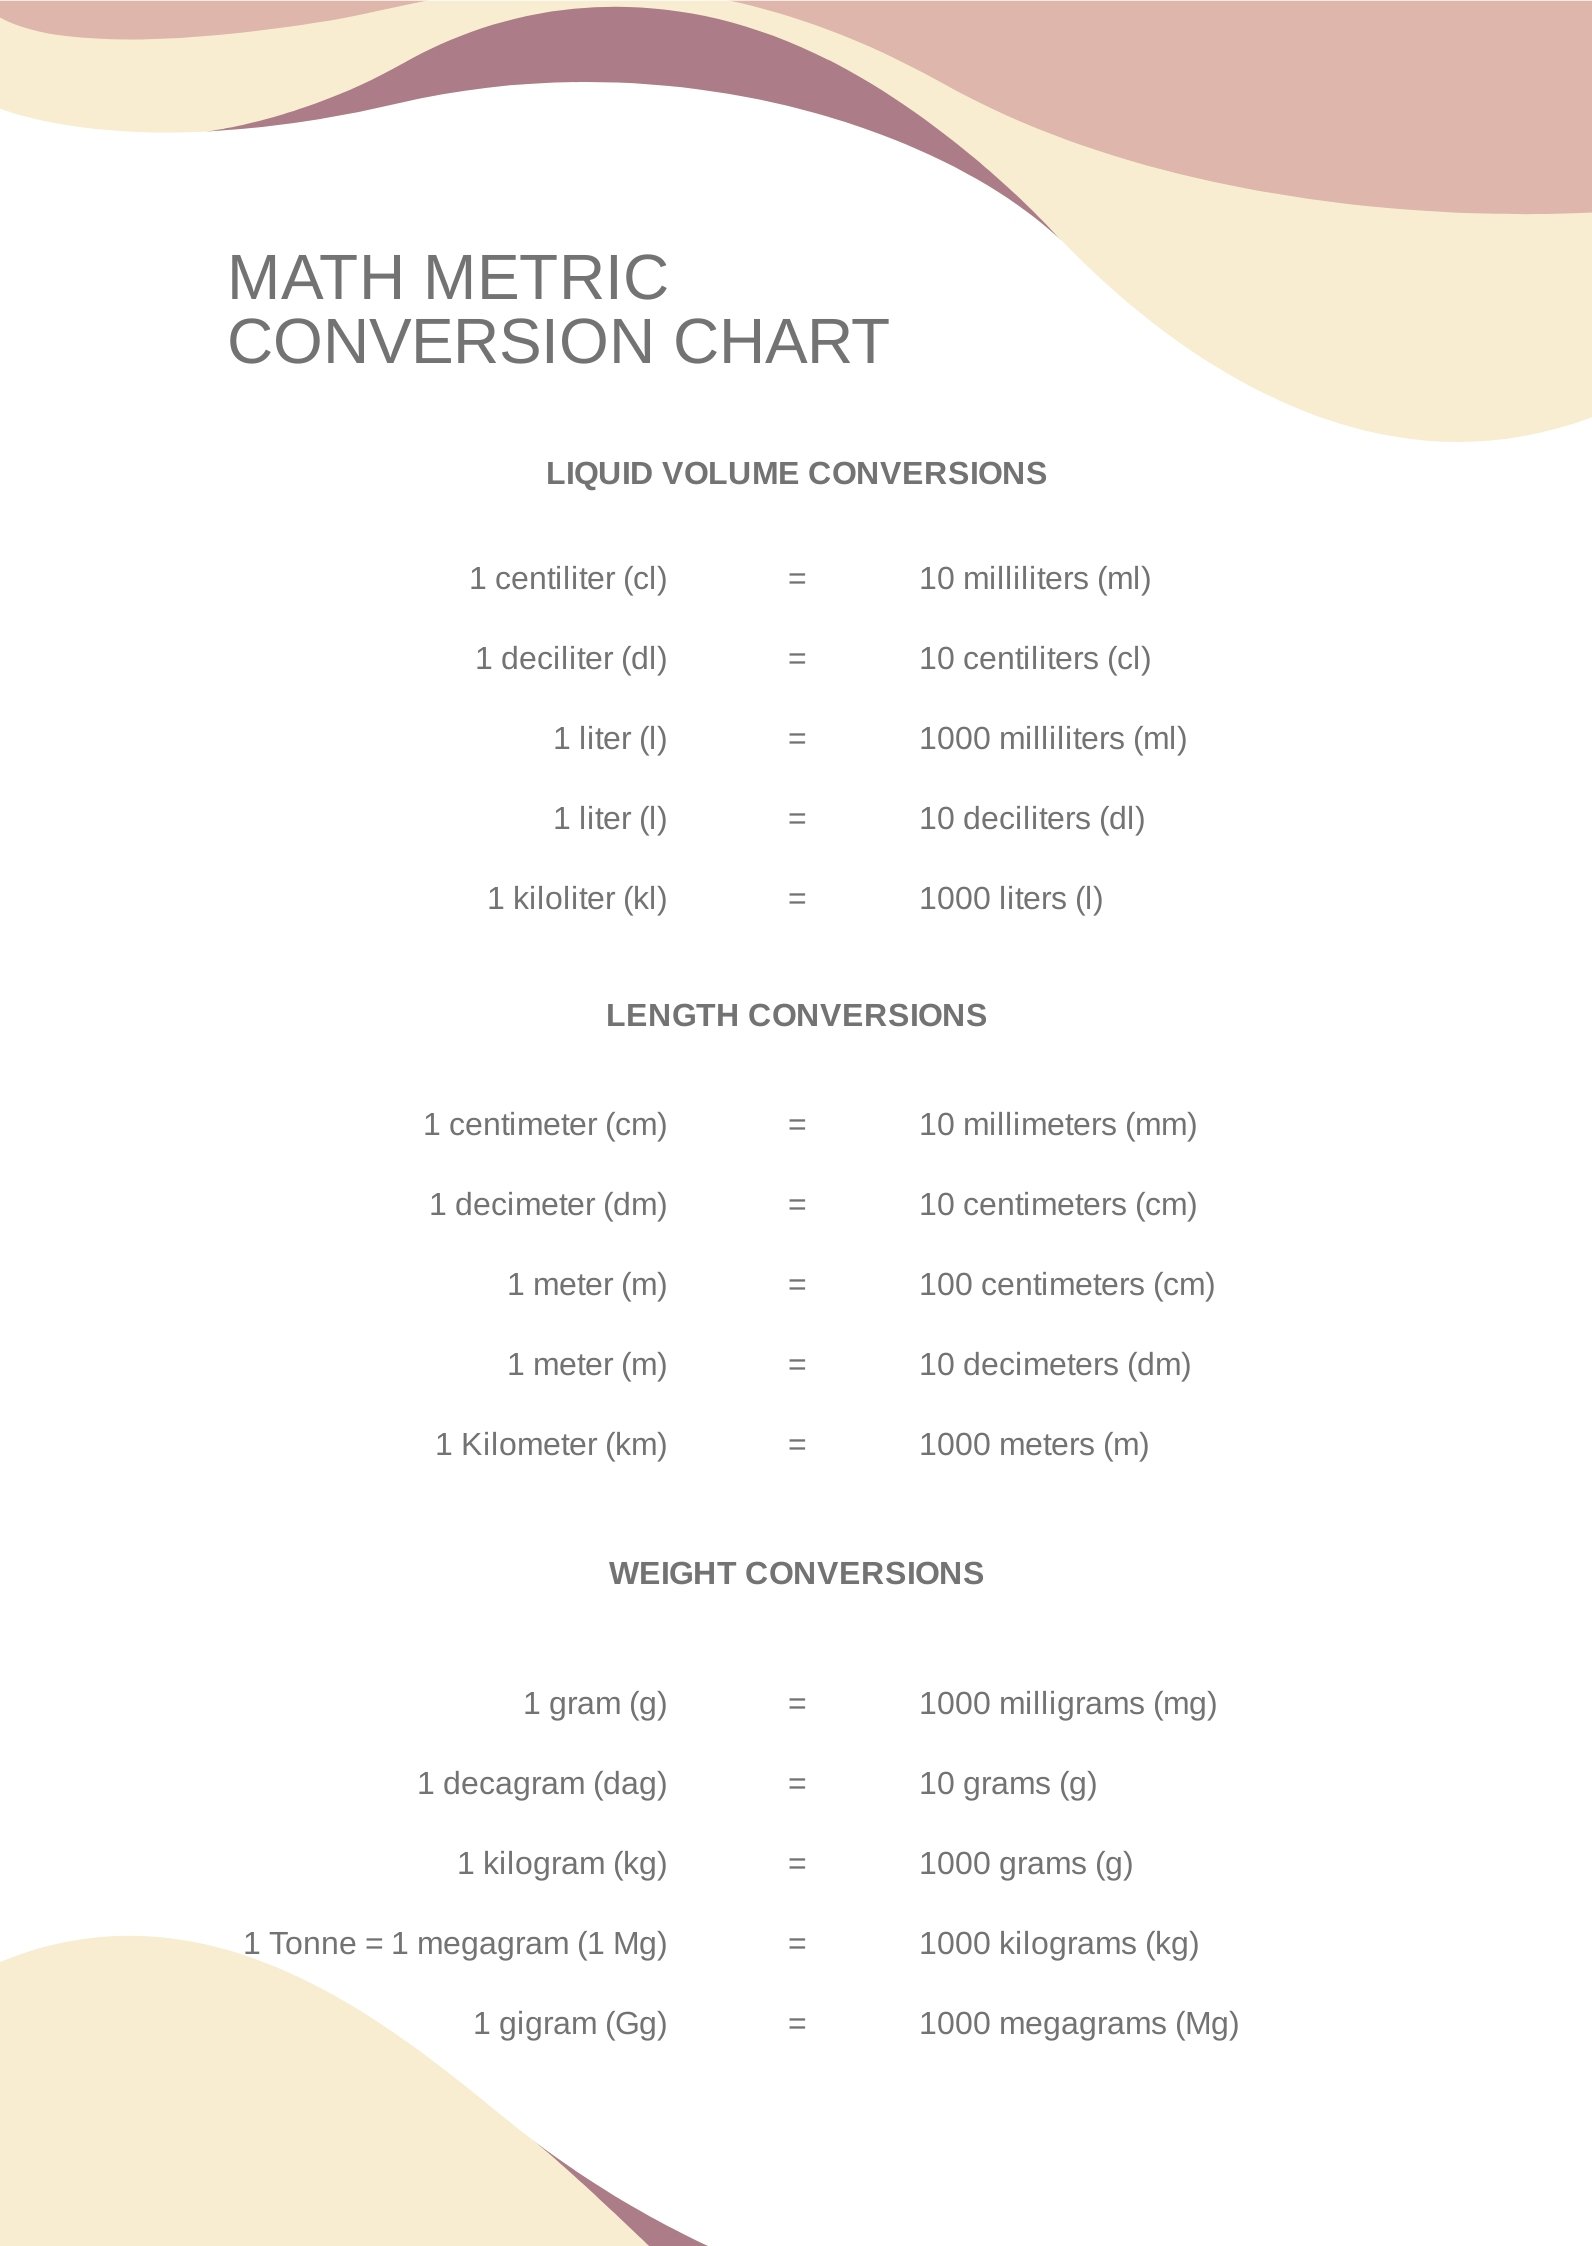 Math Metric Conversion Chart in PDF